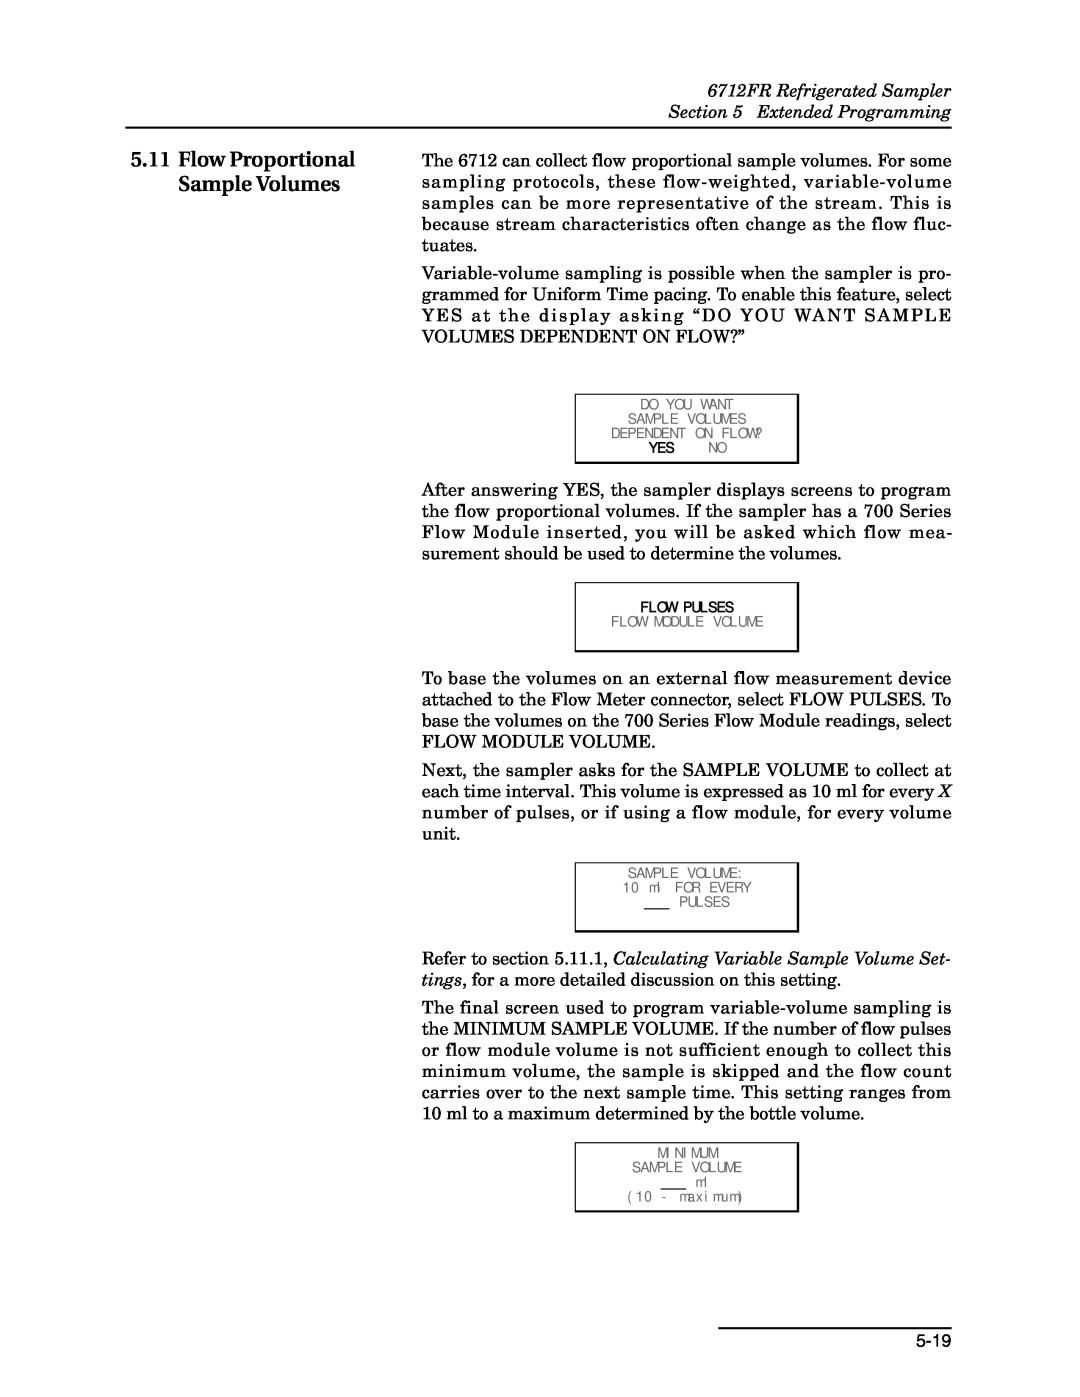 Teledyne manual Flow Proportional Sample Volumes, 6712FR Refrigerated Sampler Extended Programming 